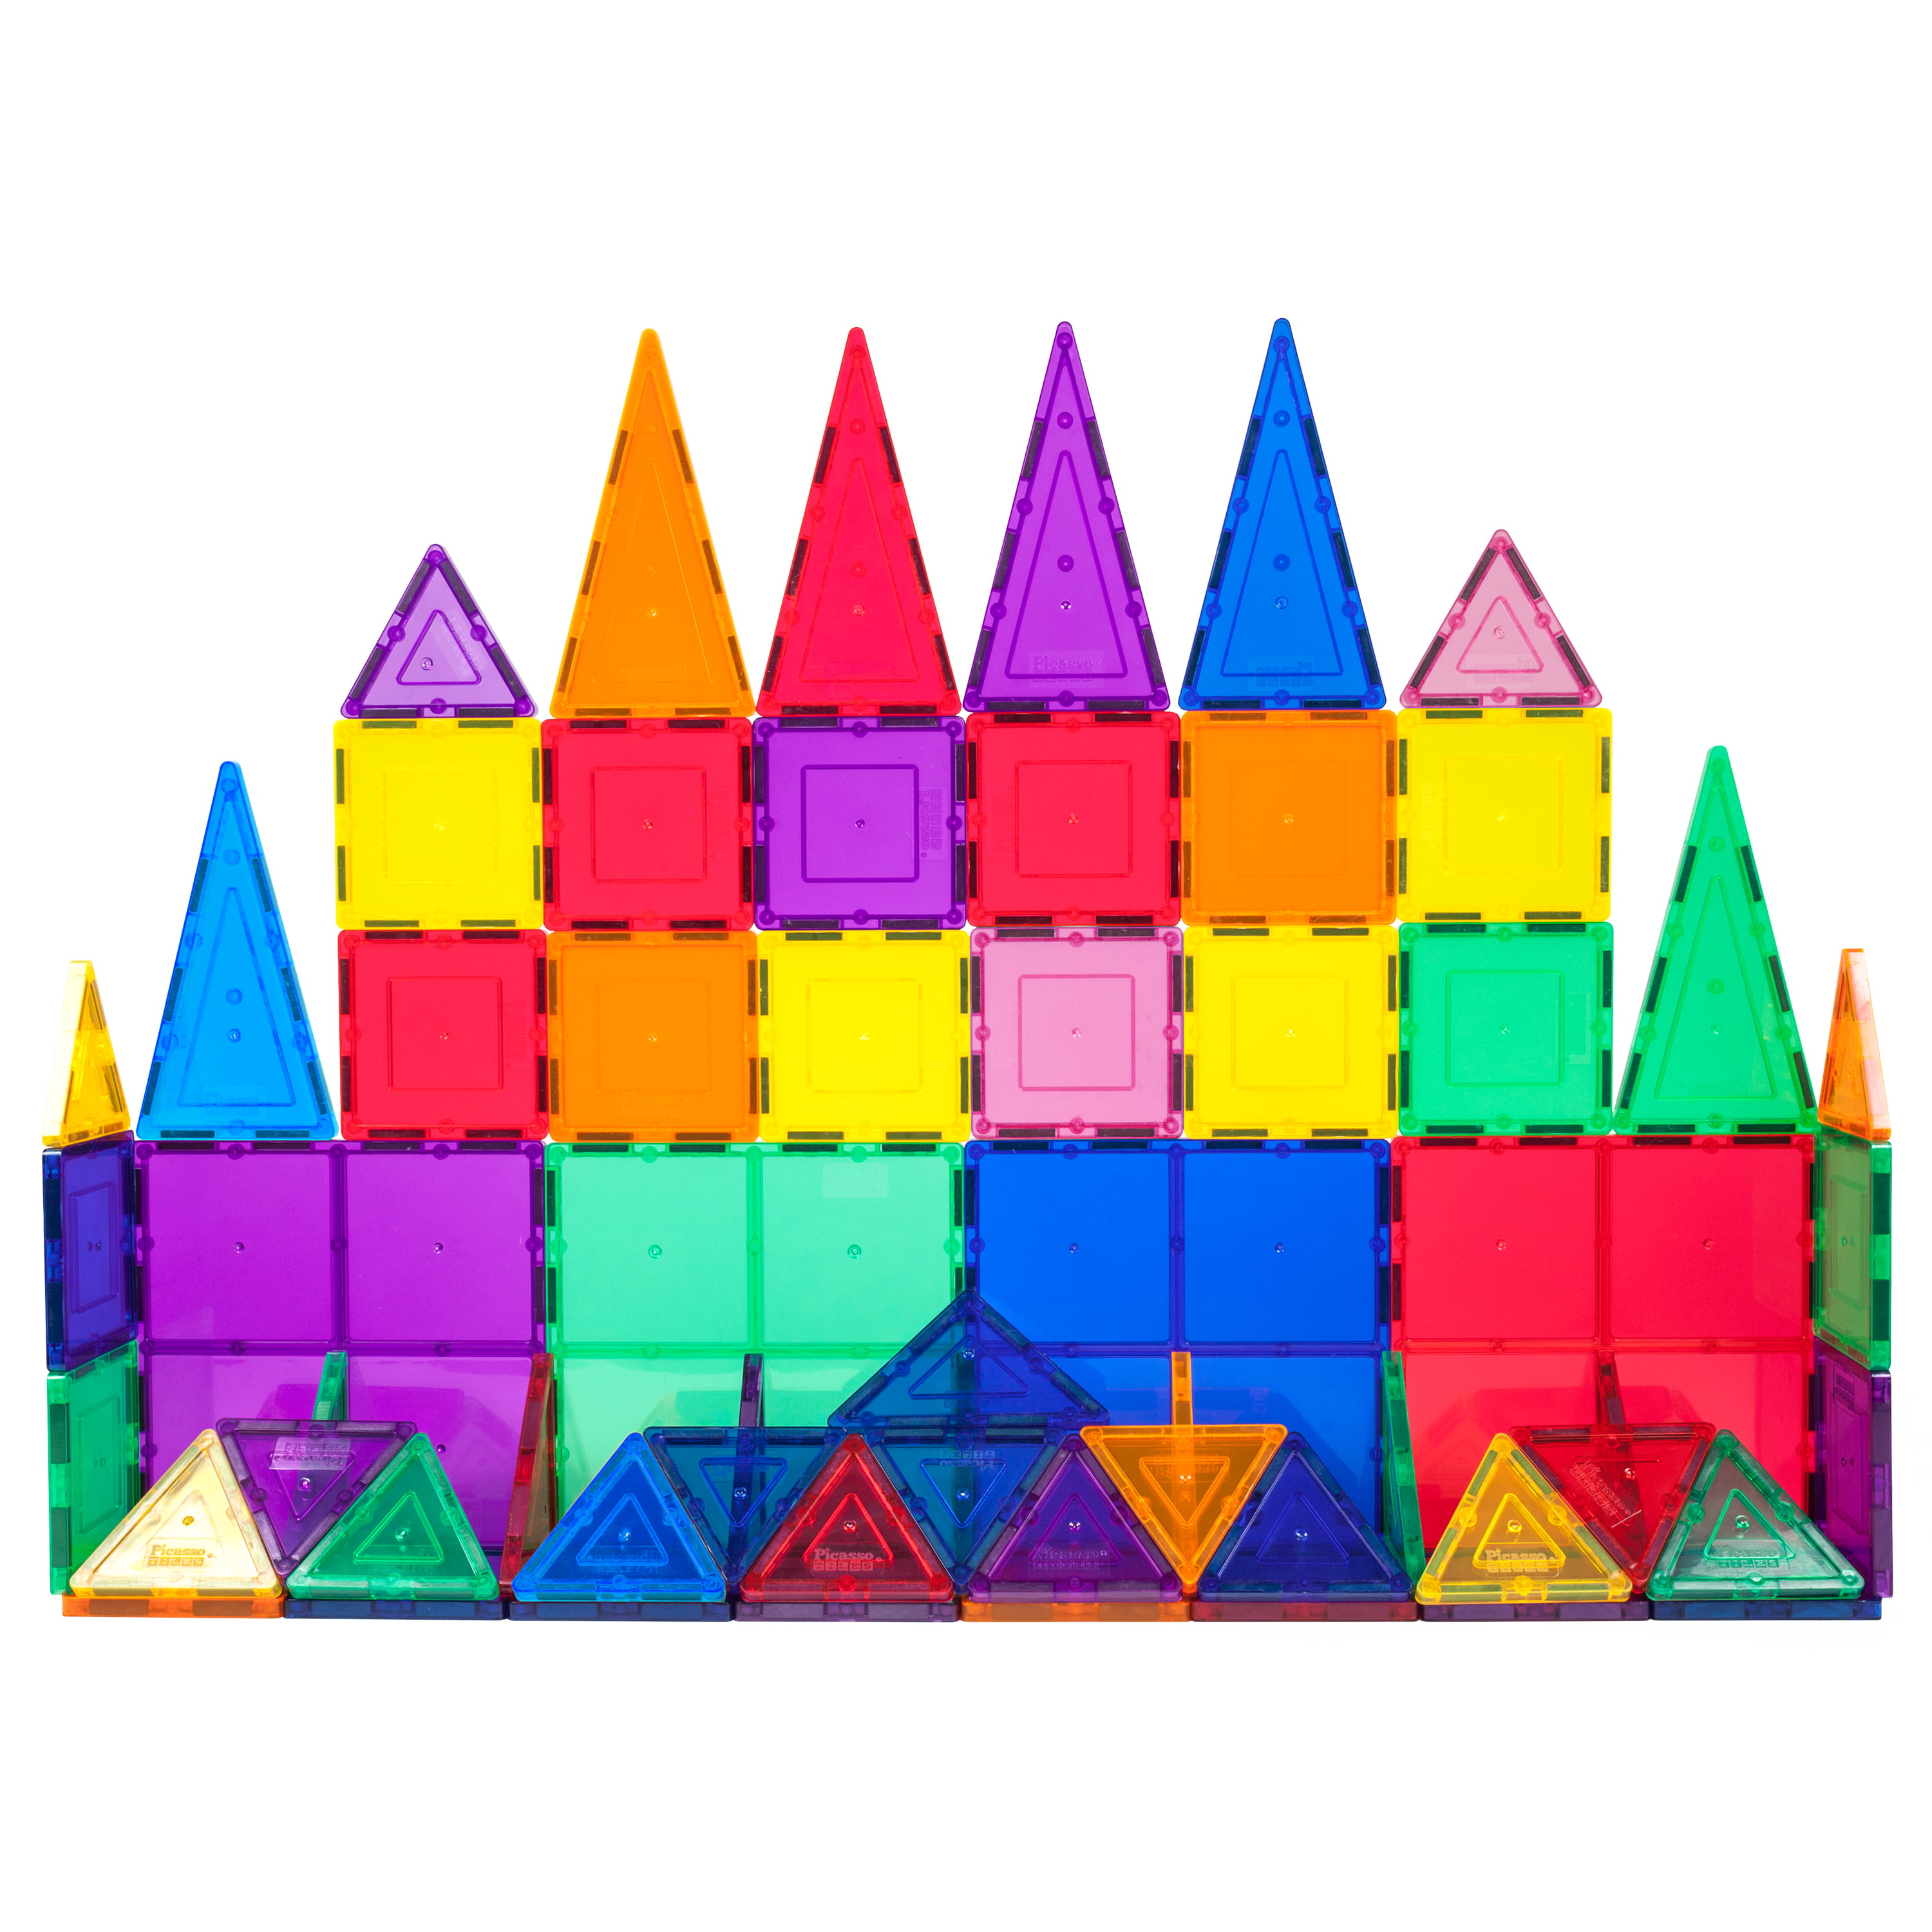 Picasso Tiles 3d Magnetic Building Block Sets Flash Sales, 53% OFF |  www.osana.care